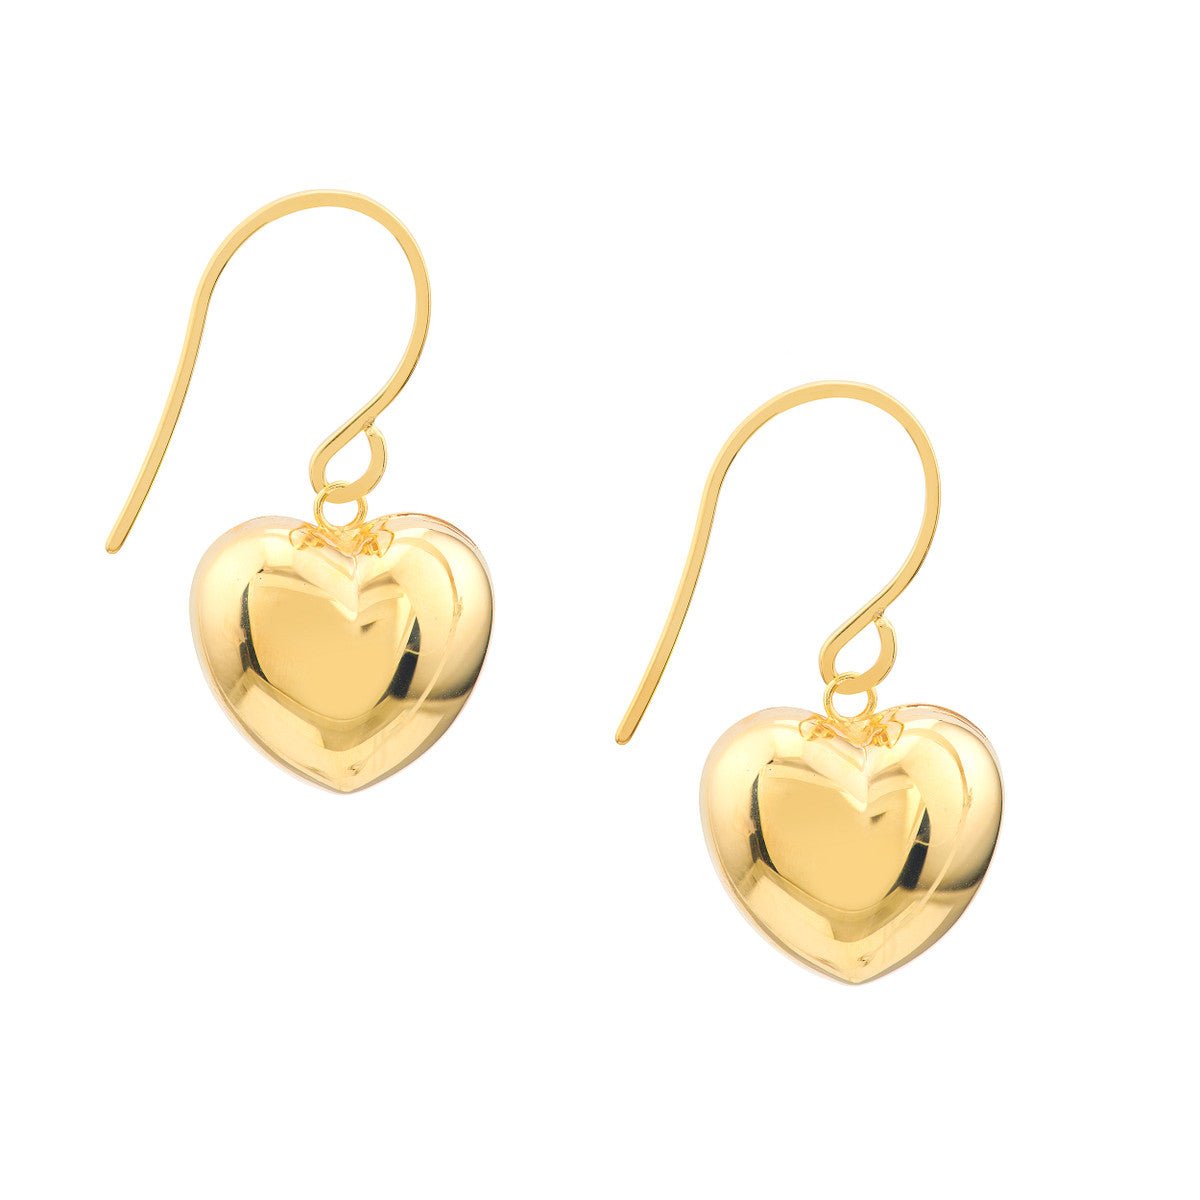 Dangle Circle Earring Fish Hook Earrings in 14K Yellow Gold